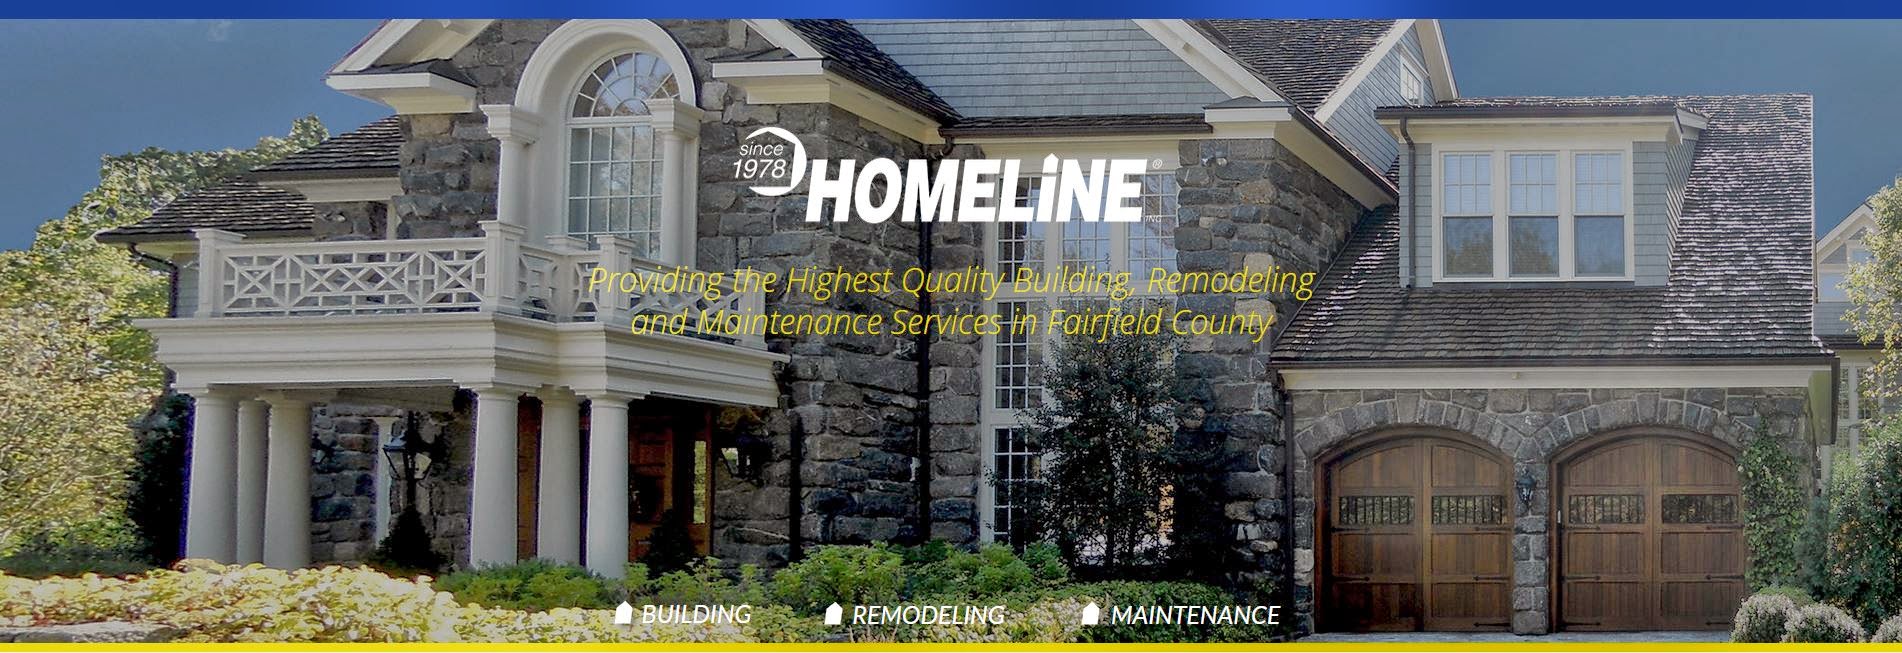 HomeSquare Design & Building Services